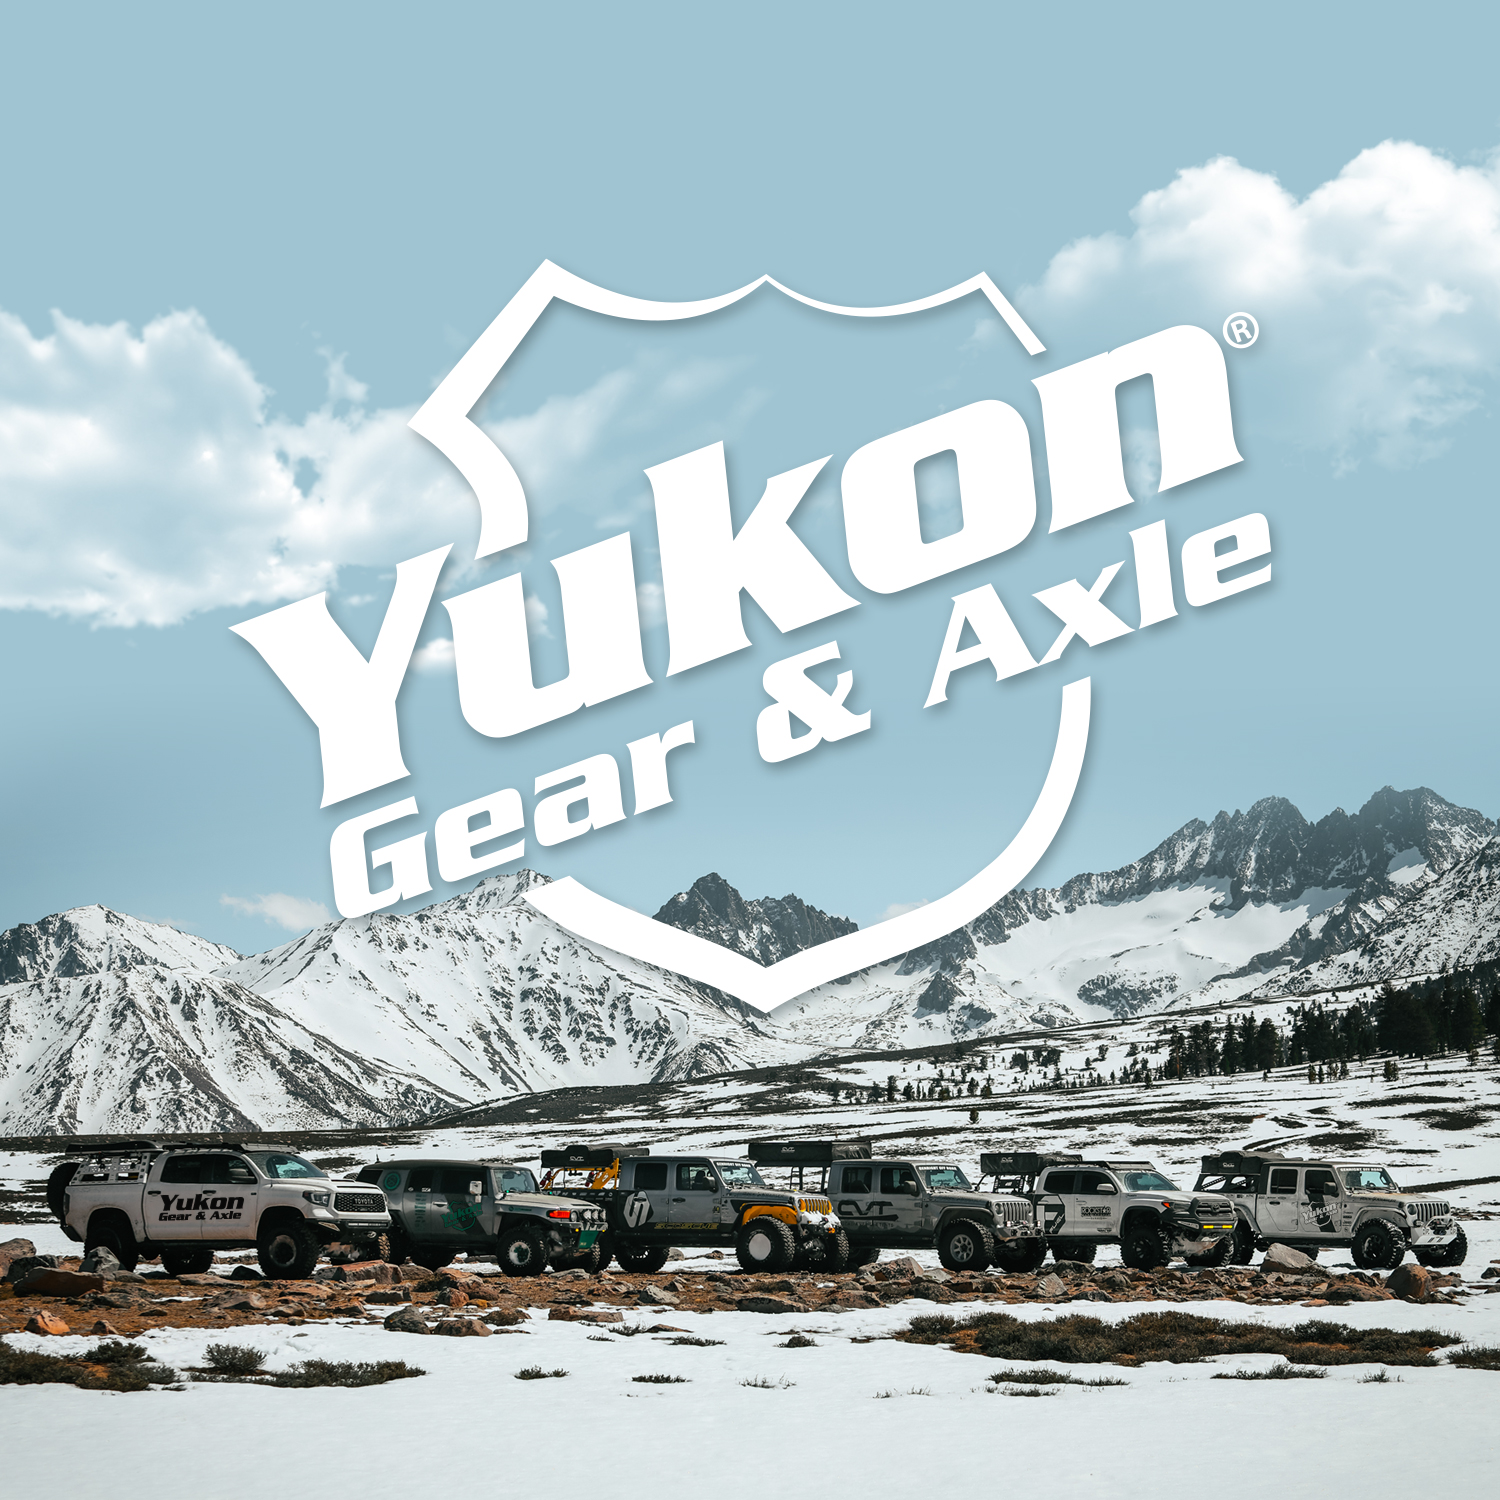 Yukon high performance replacement ring & pinion gear set, Dana 44, 4.88 ratio 